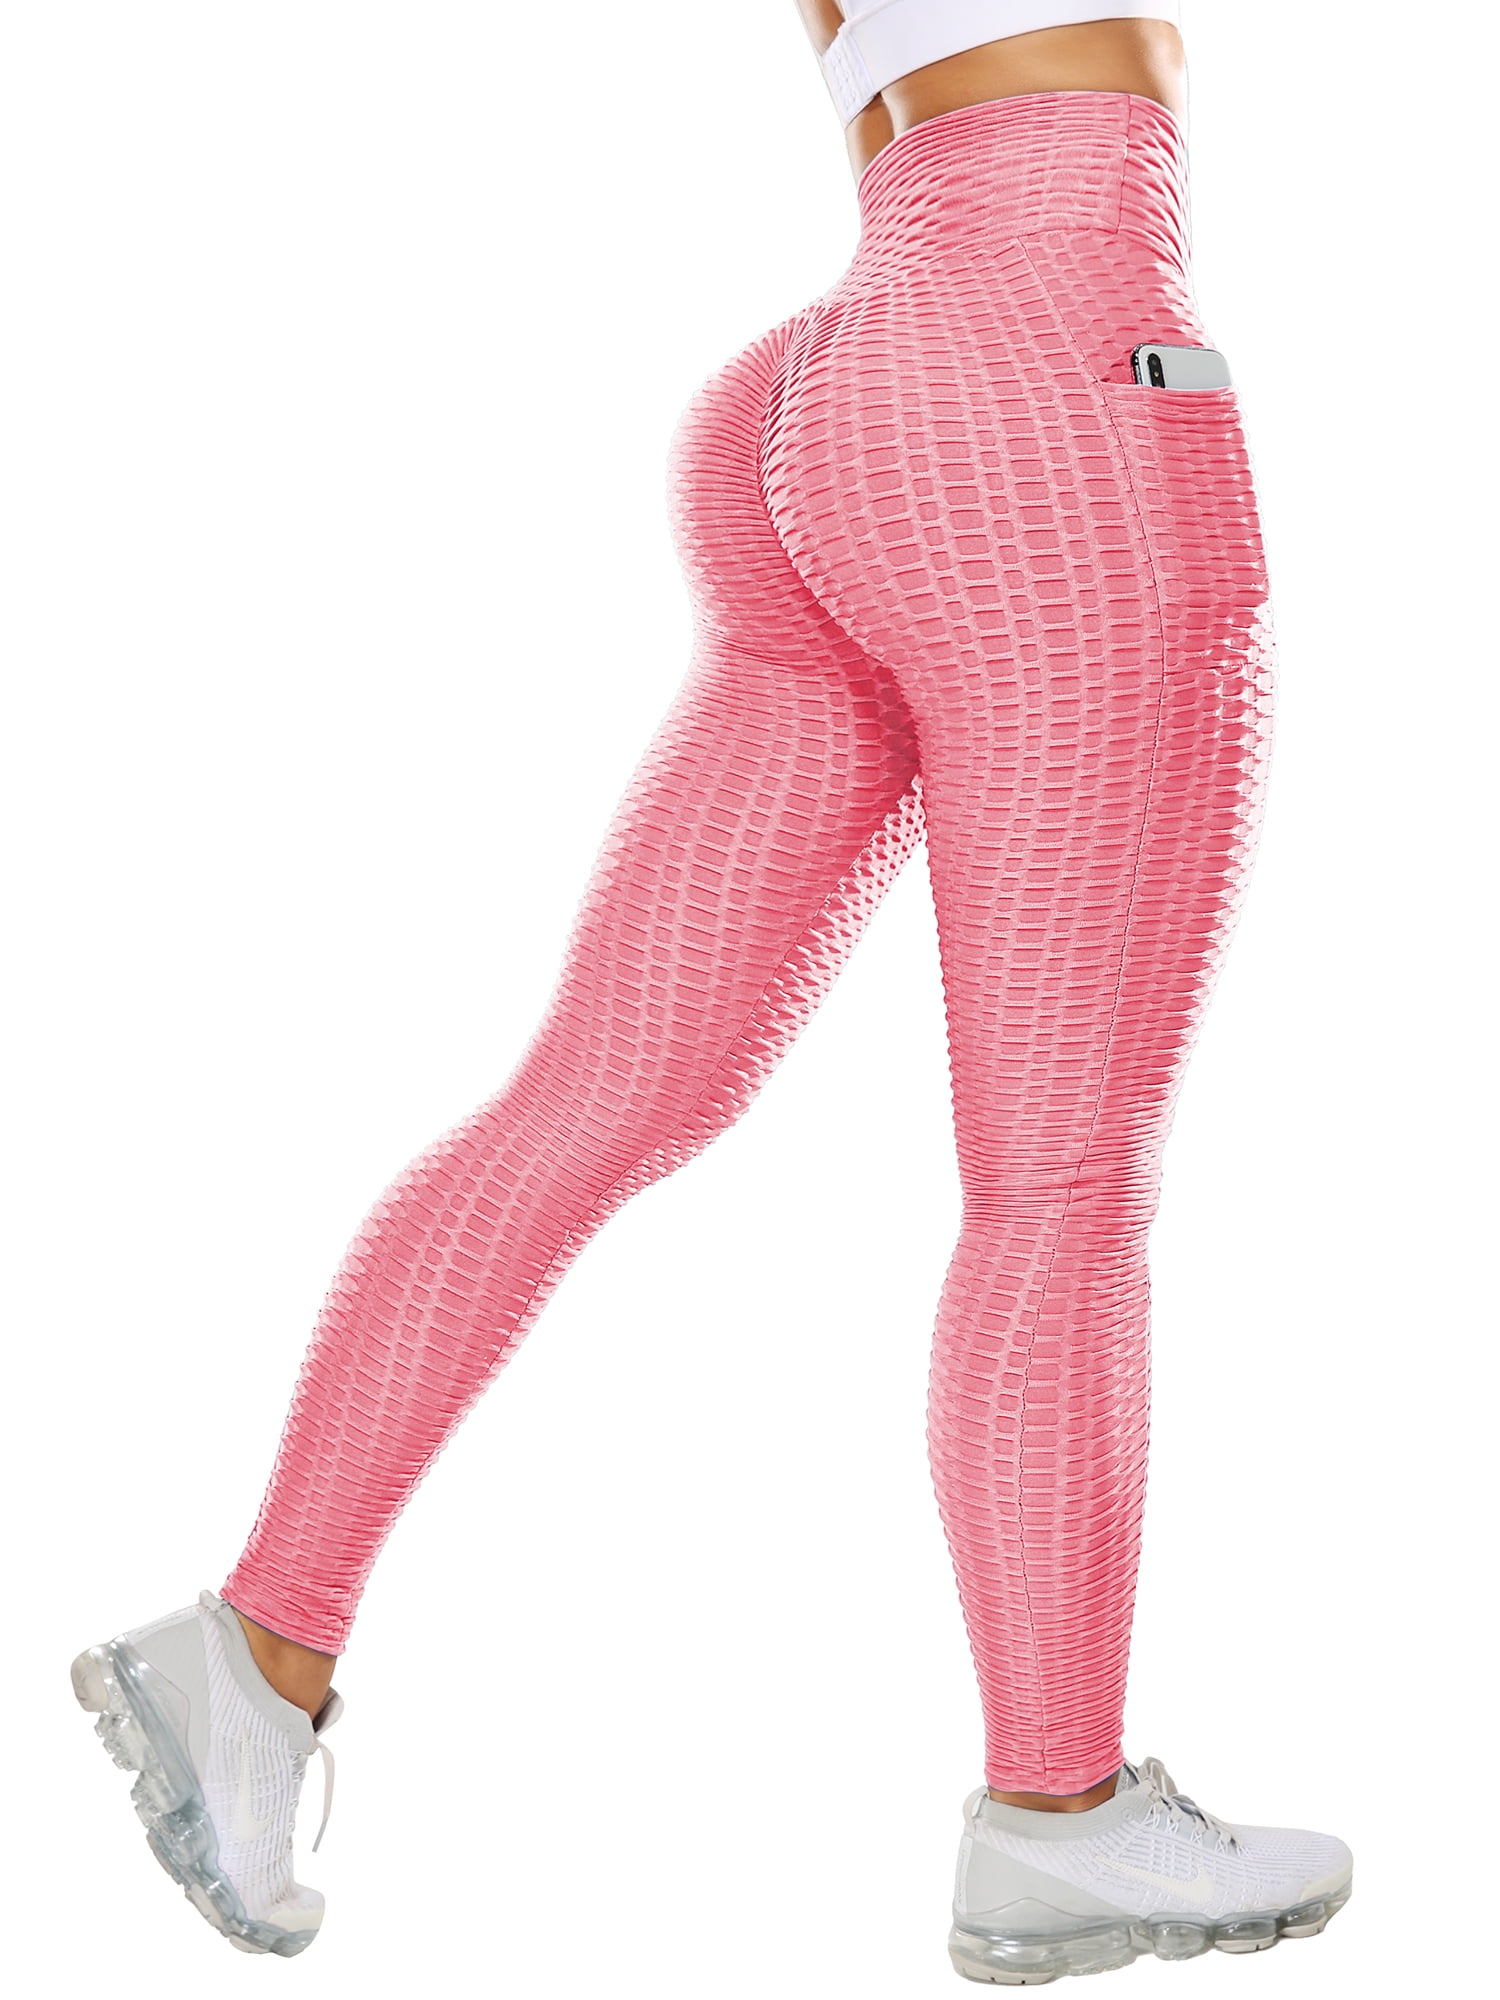 VASLANDA High Waist Yoga Pants with Pockets, Tummy Control Workout Running Yoga  Leggings for Women 